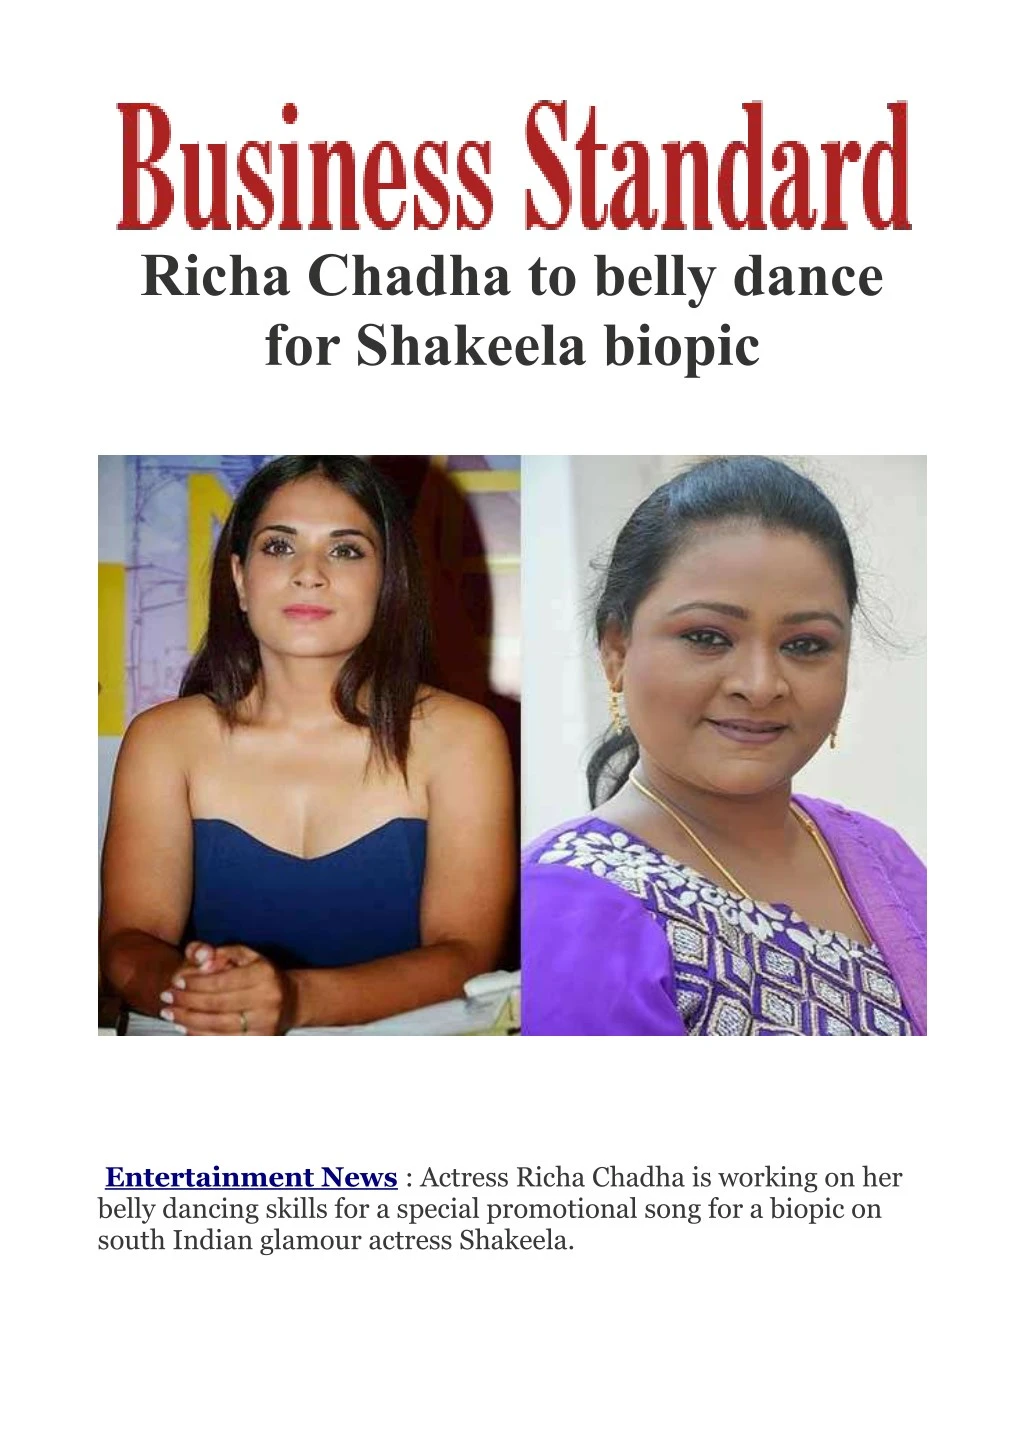 richa chadha to belly dance for shakeela biopic